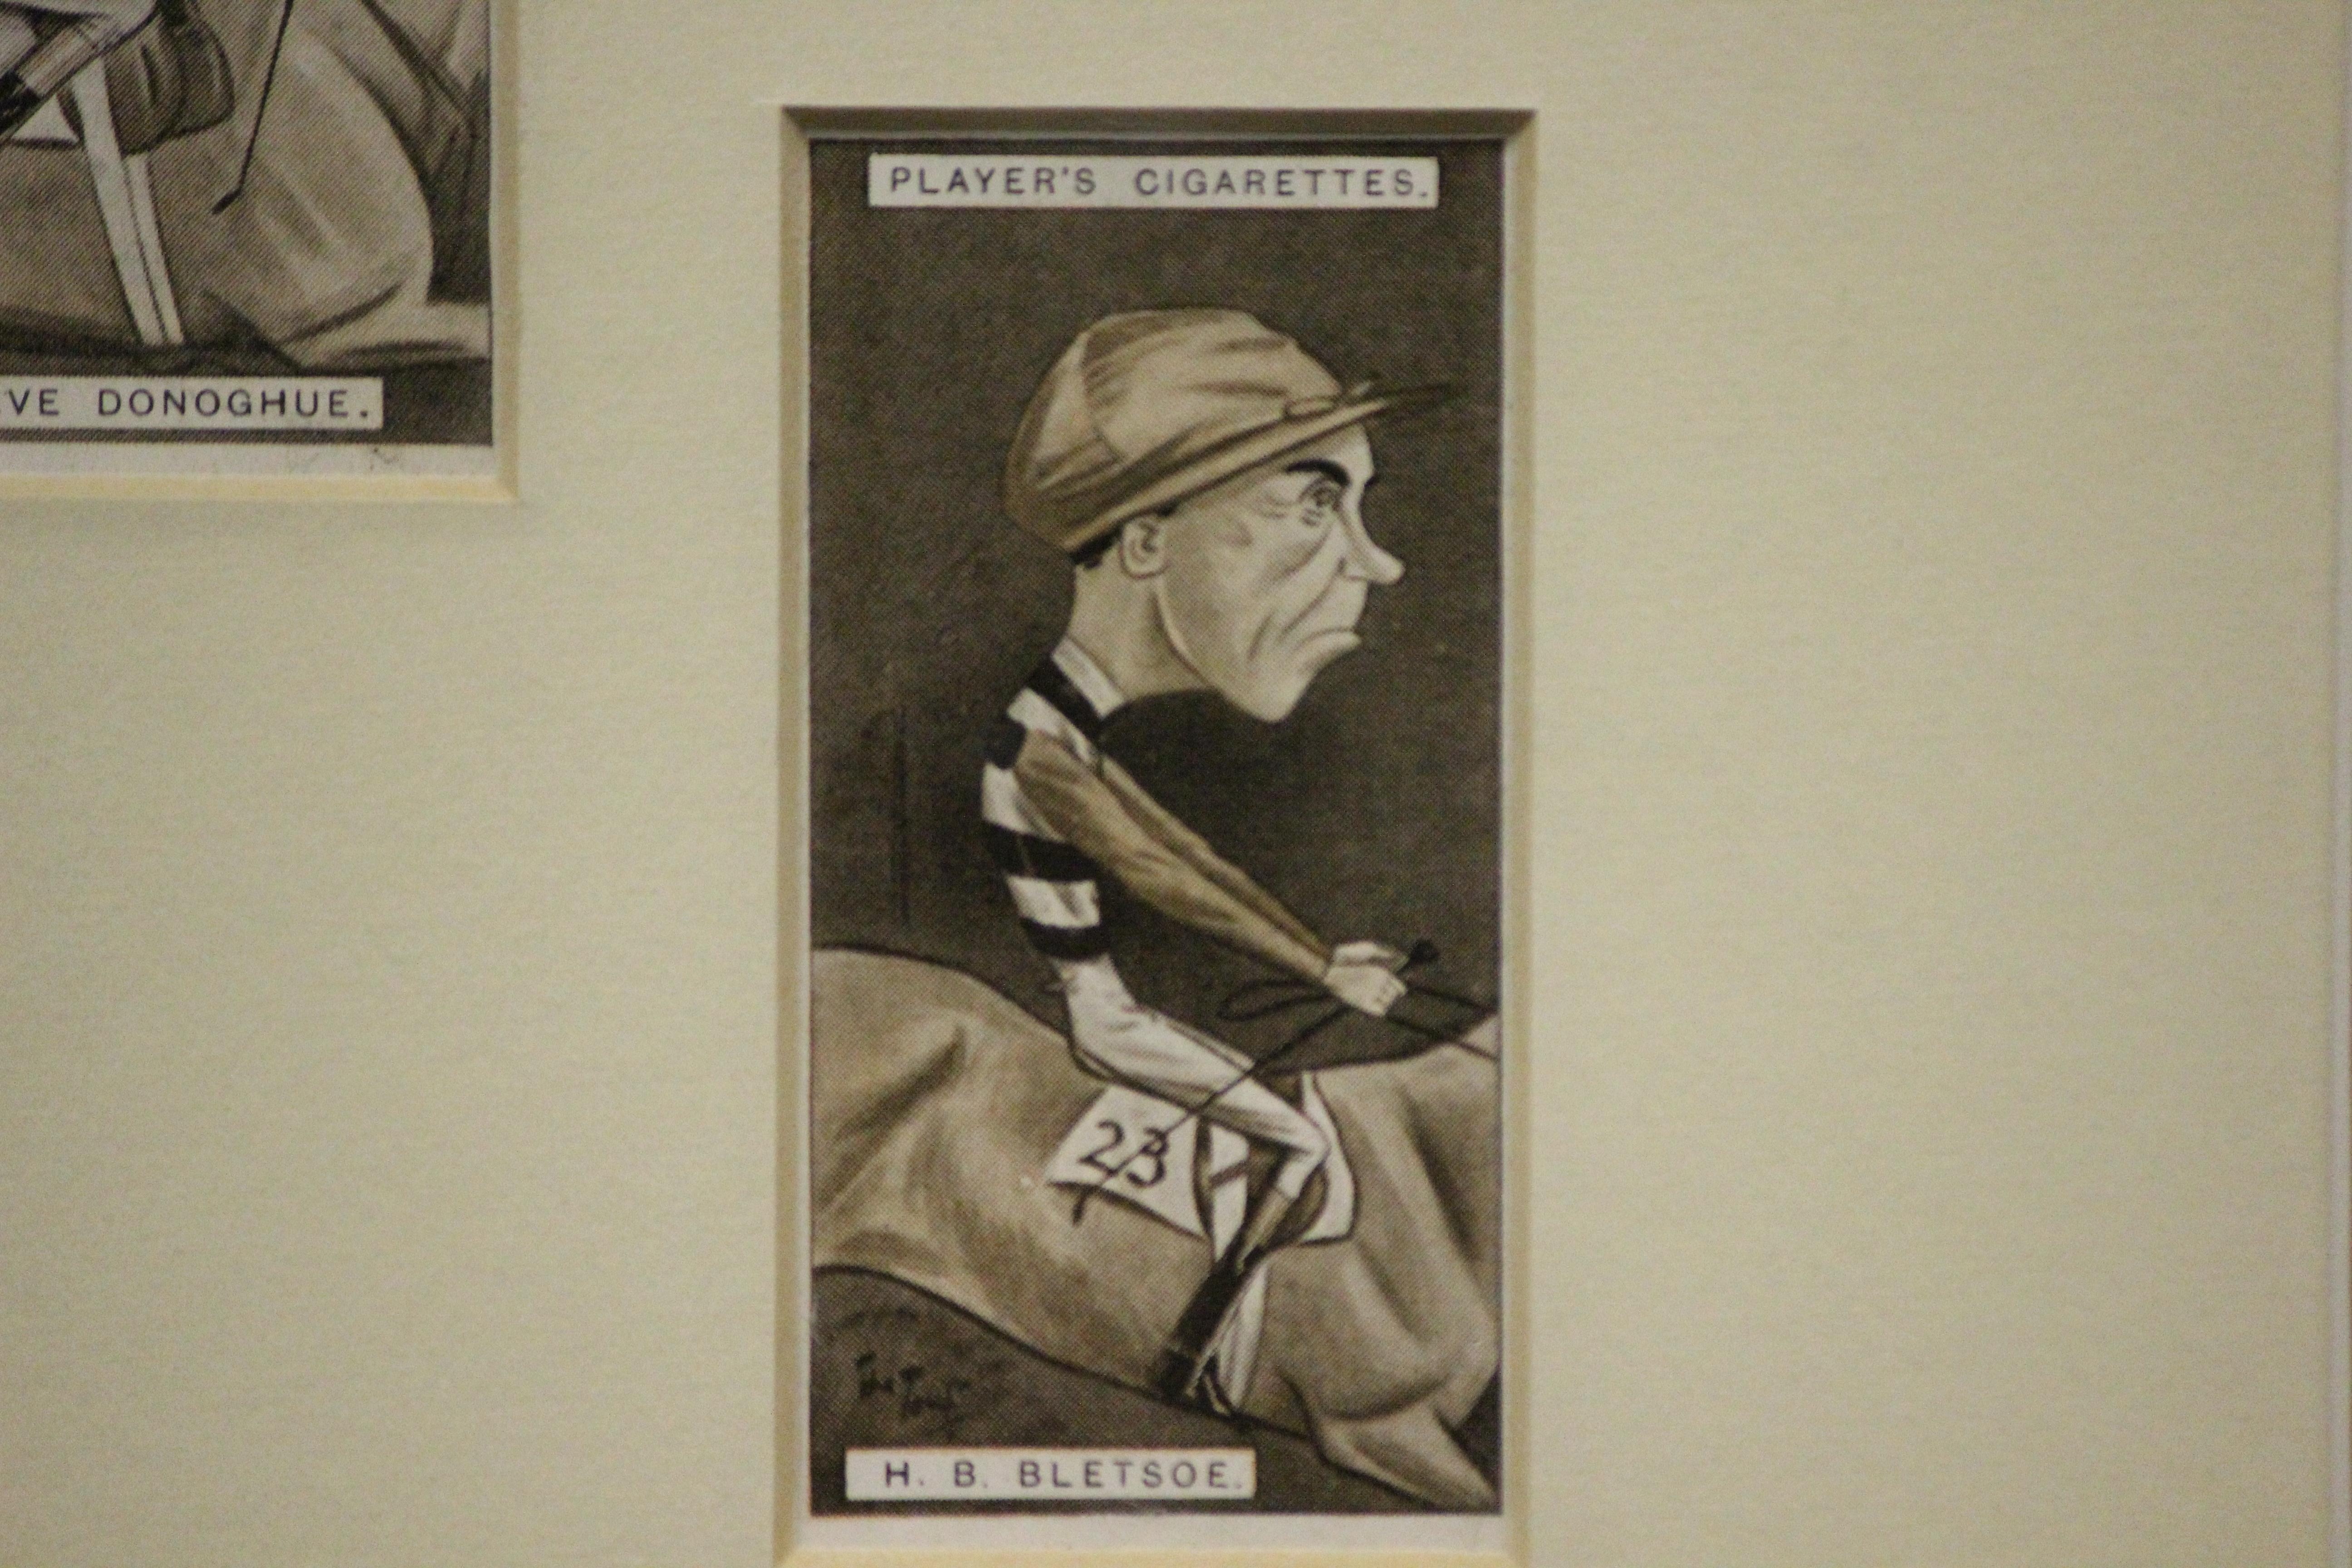 Classic English (5 custom framed) jockeys on c1930s Player's Cigarettes cards

Image Sz: 6 1/2